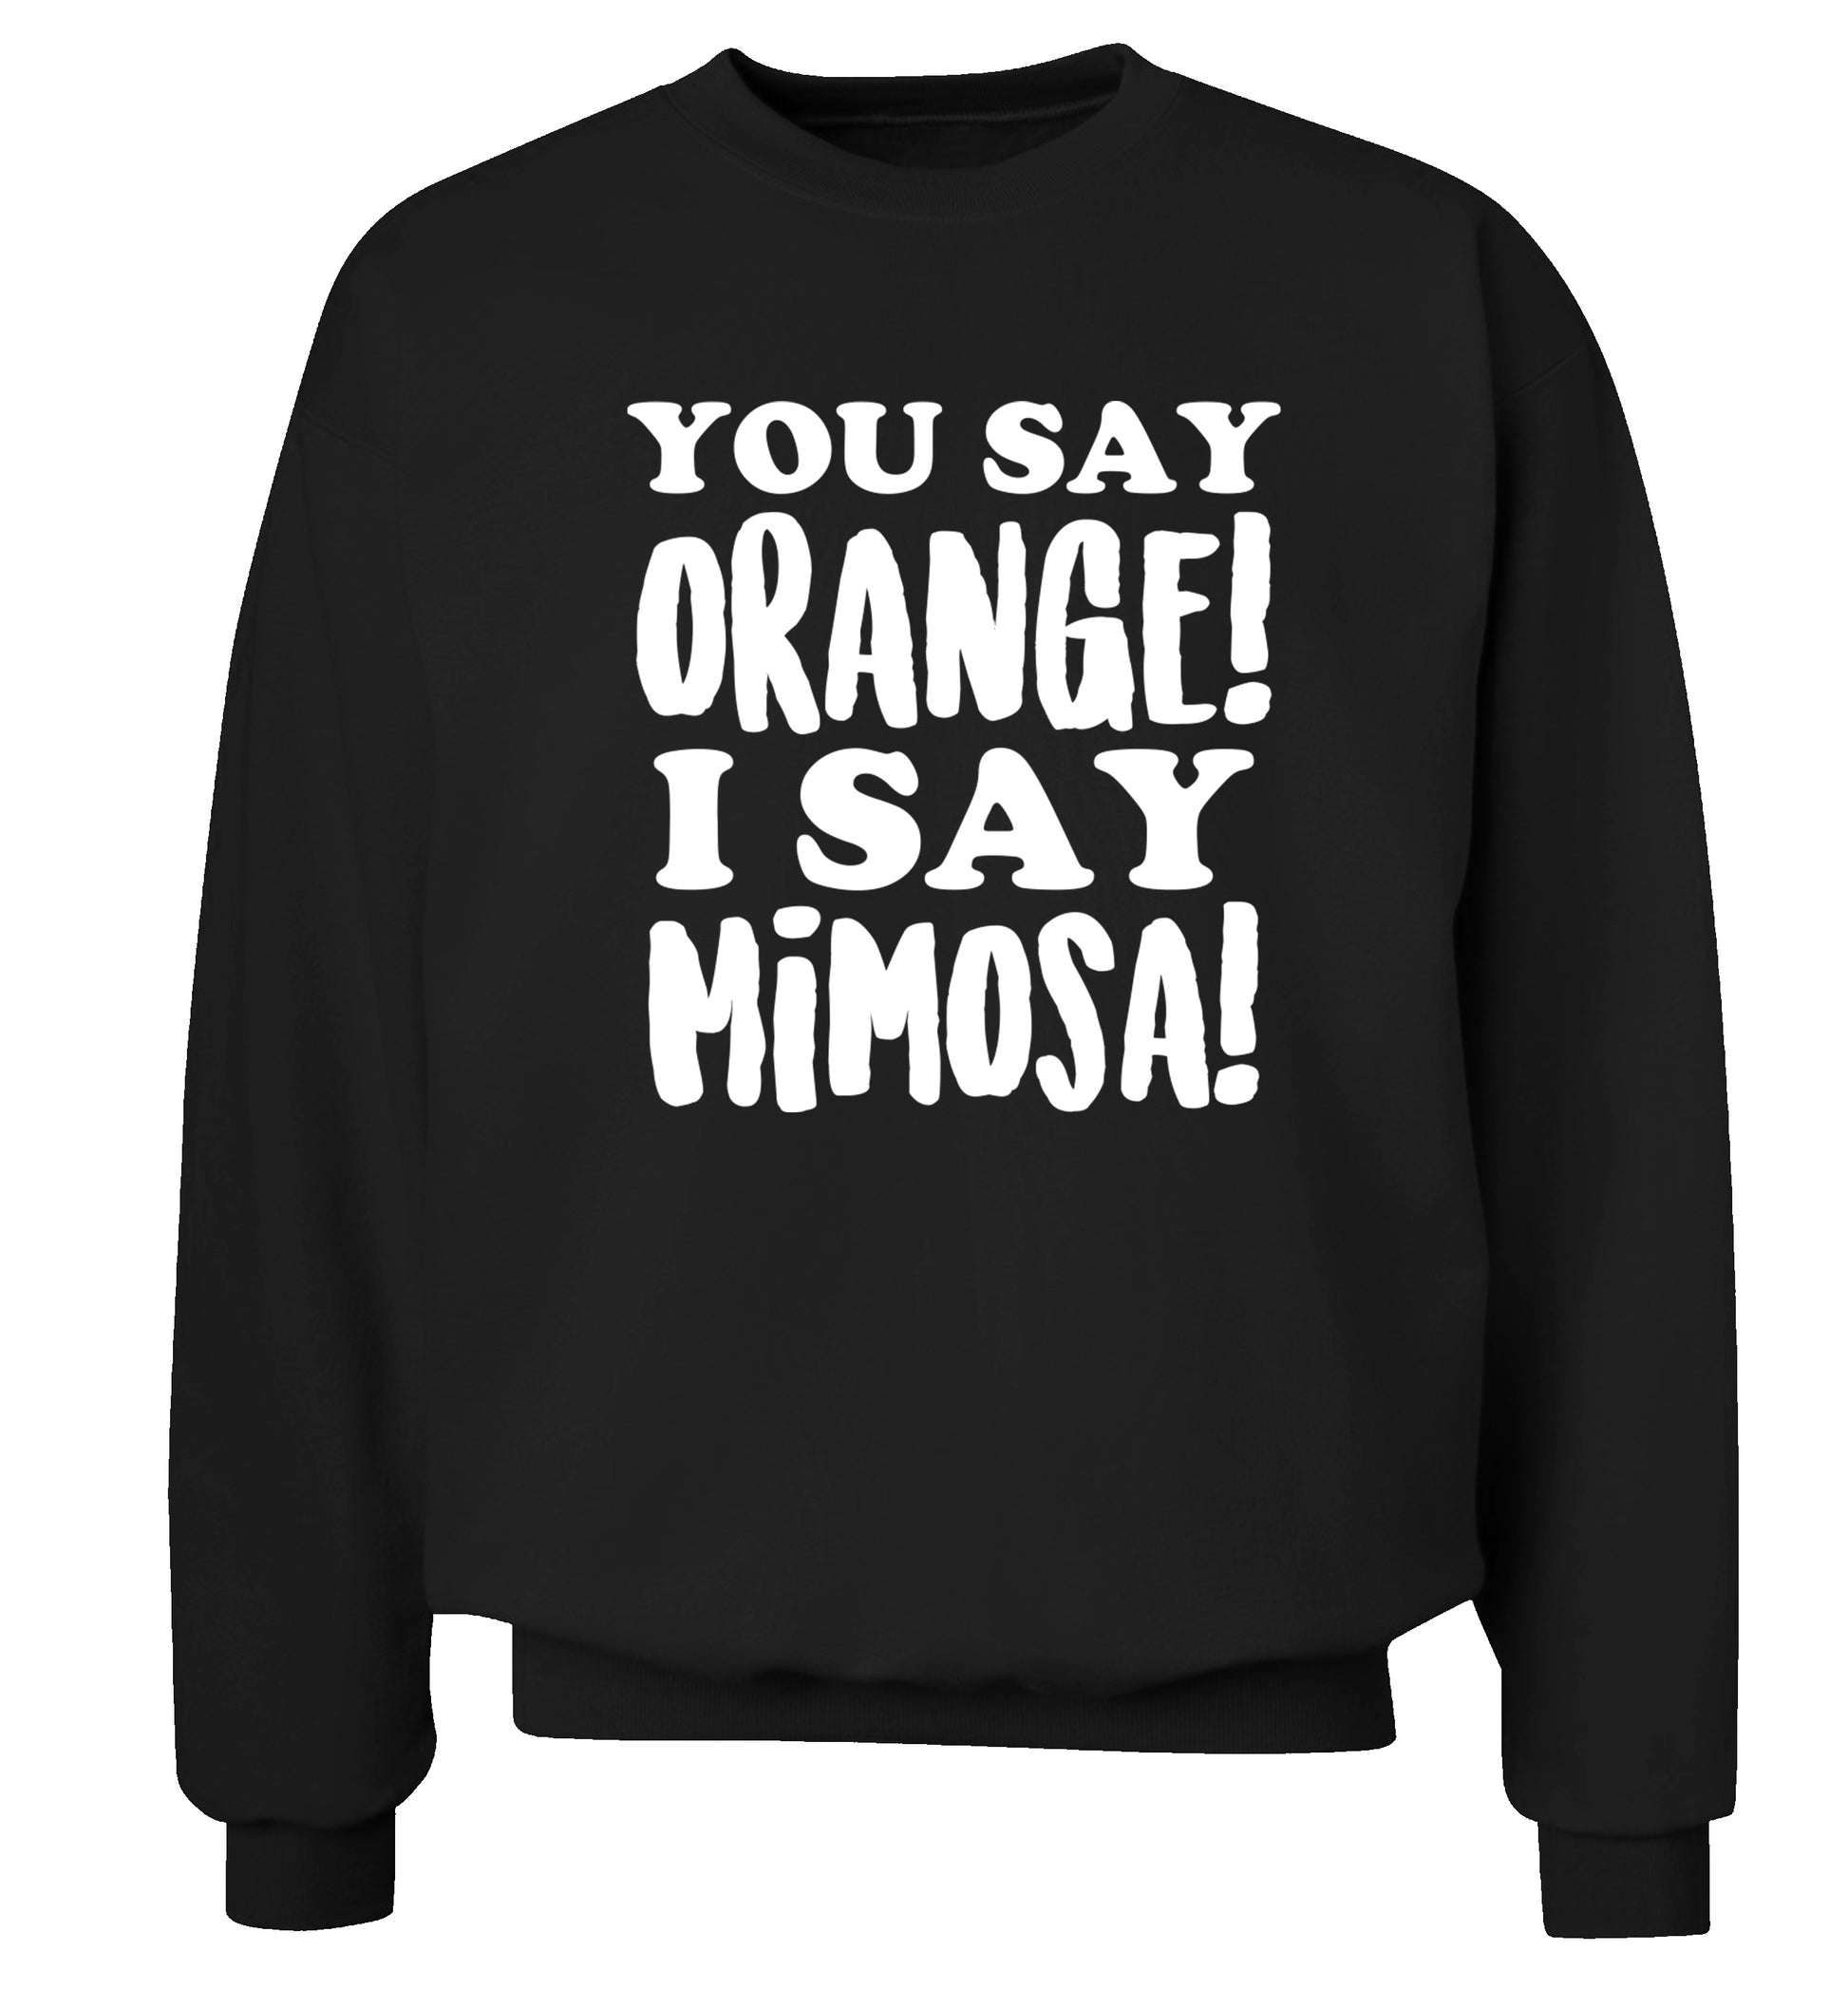 You say orange I say mimosa! Adult's unisex black Sweater 2XL